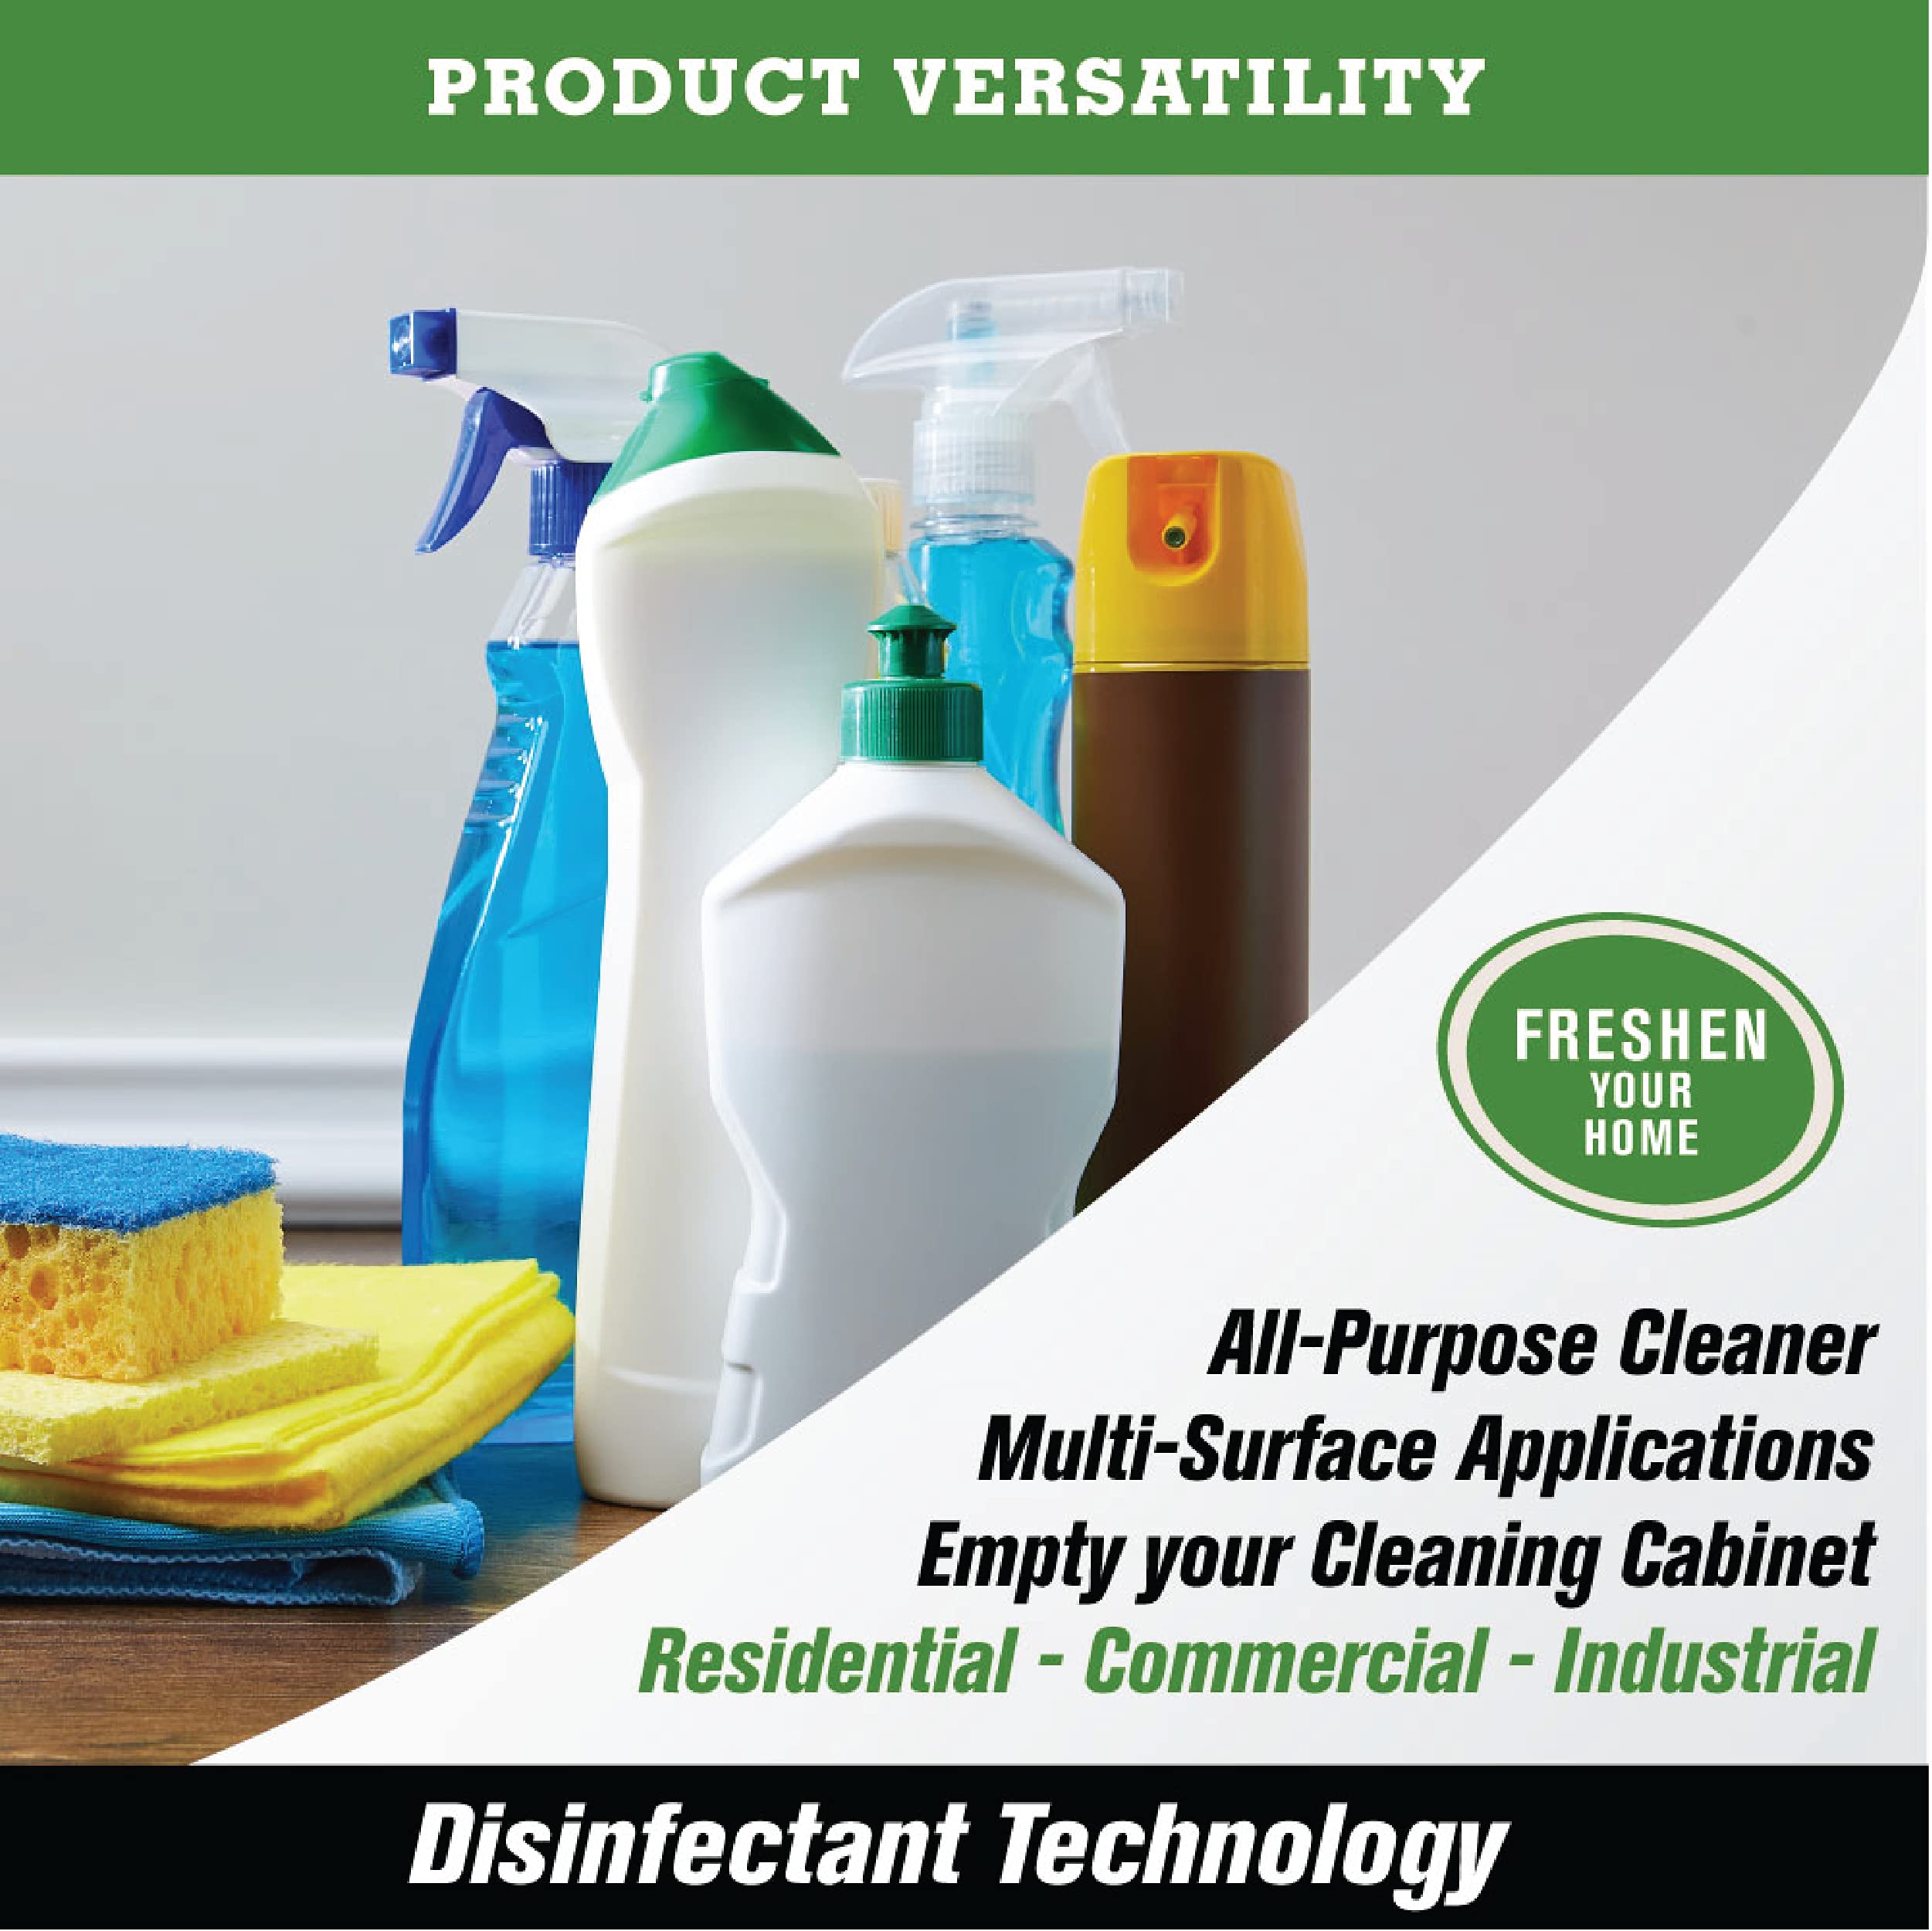 SNiPER Hospital Disinfectant, Odor Eliminator & All-Purpose Cleaner, 1 Gallon, 2-Pack